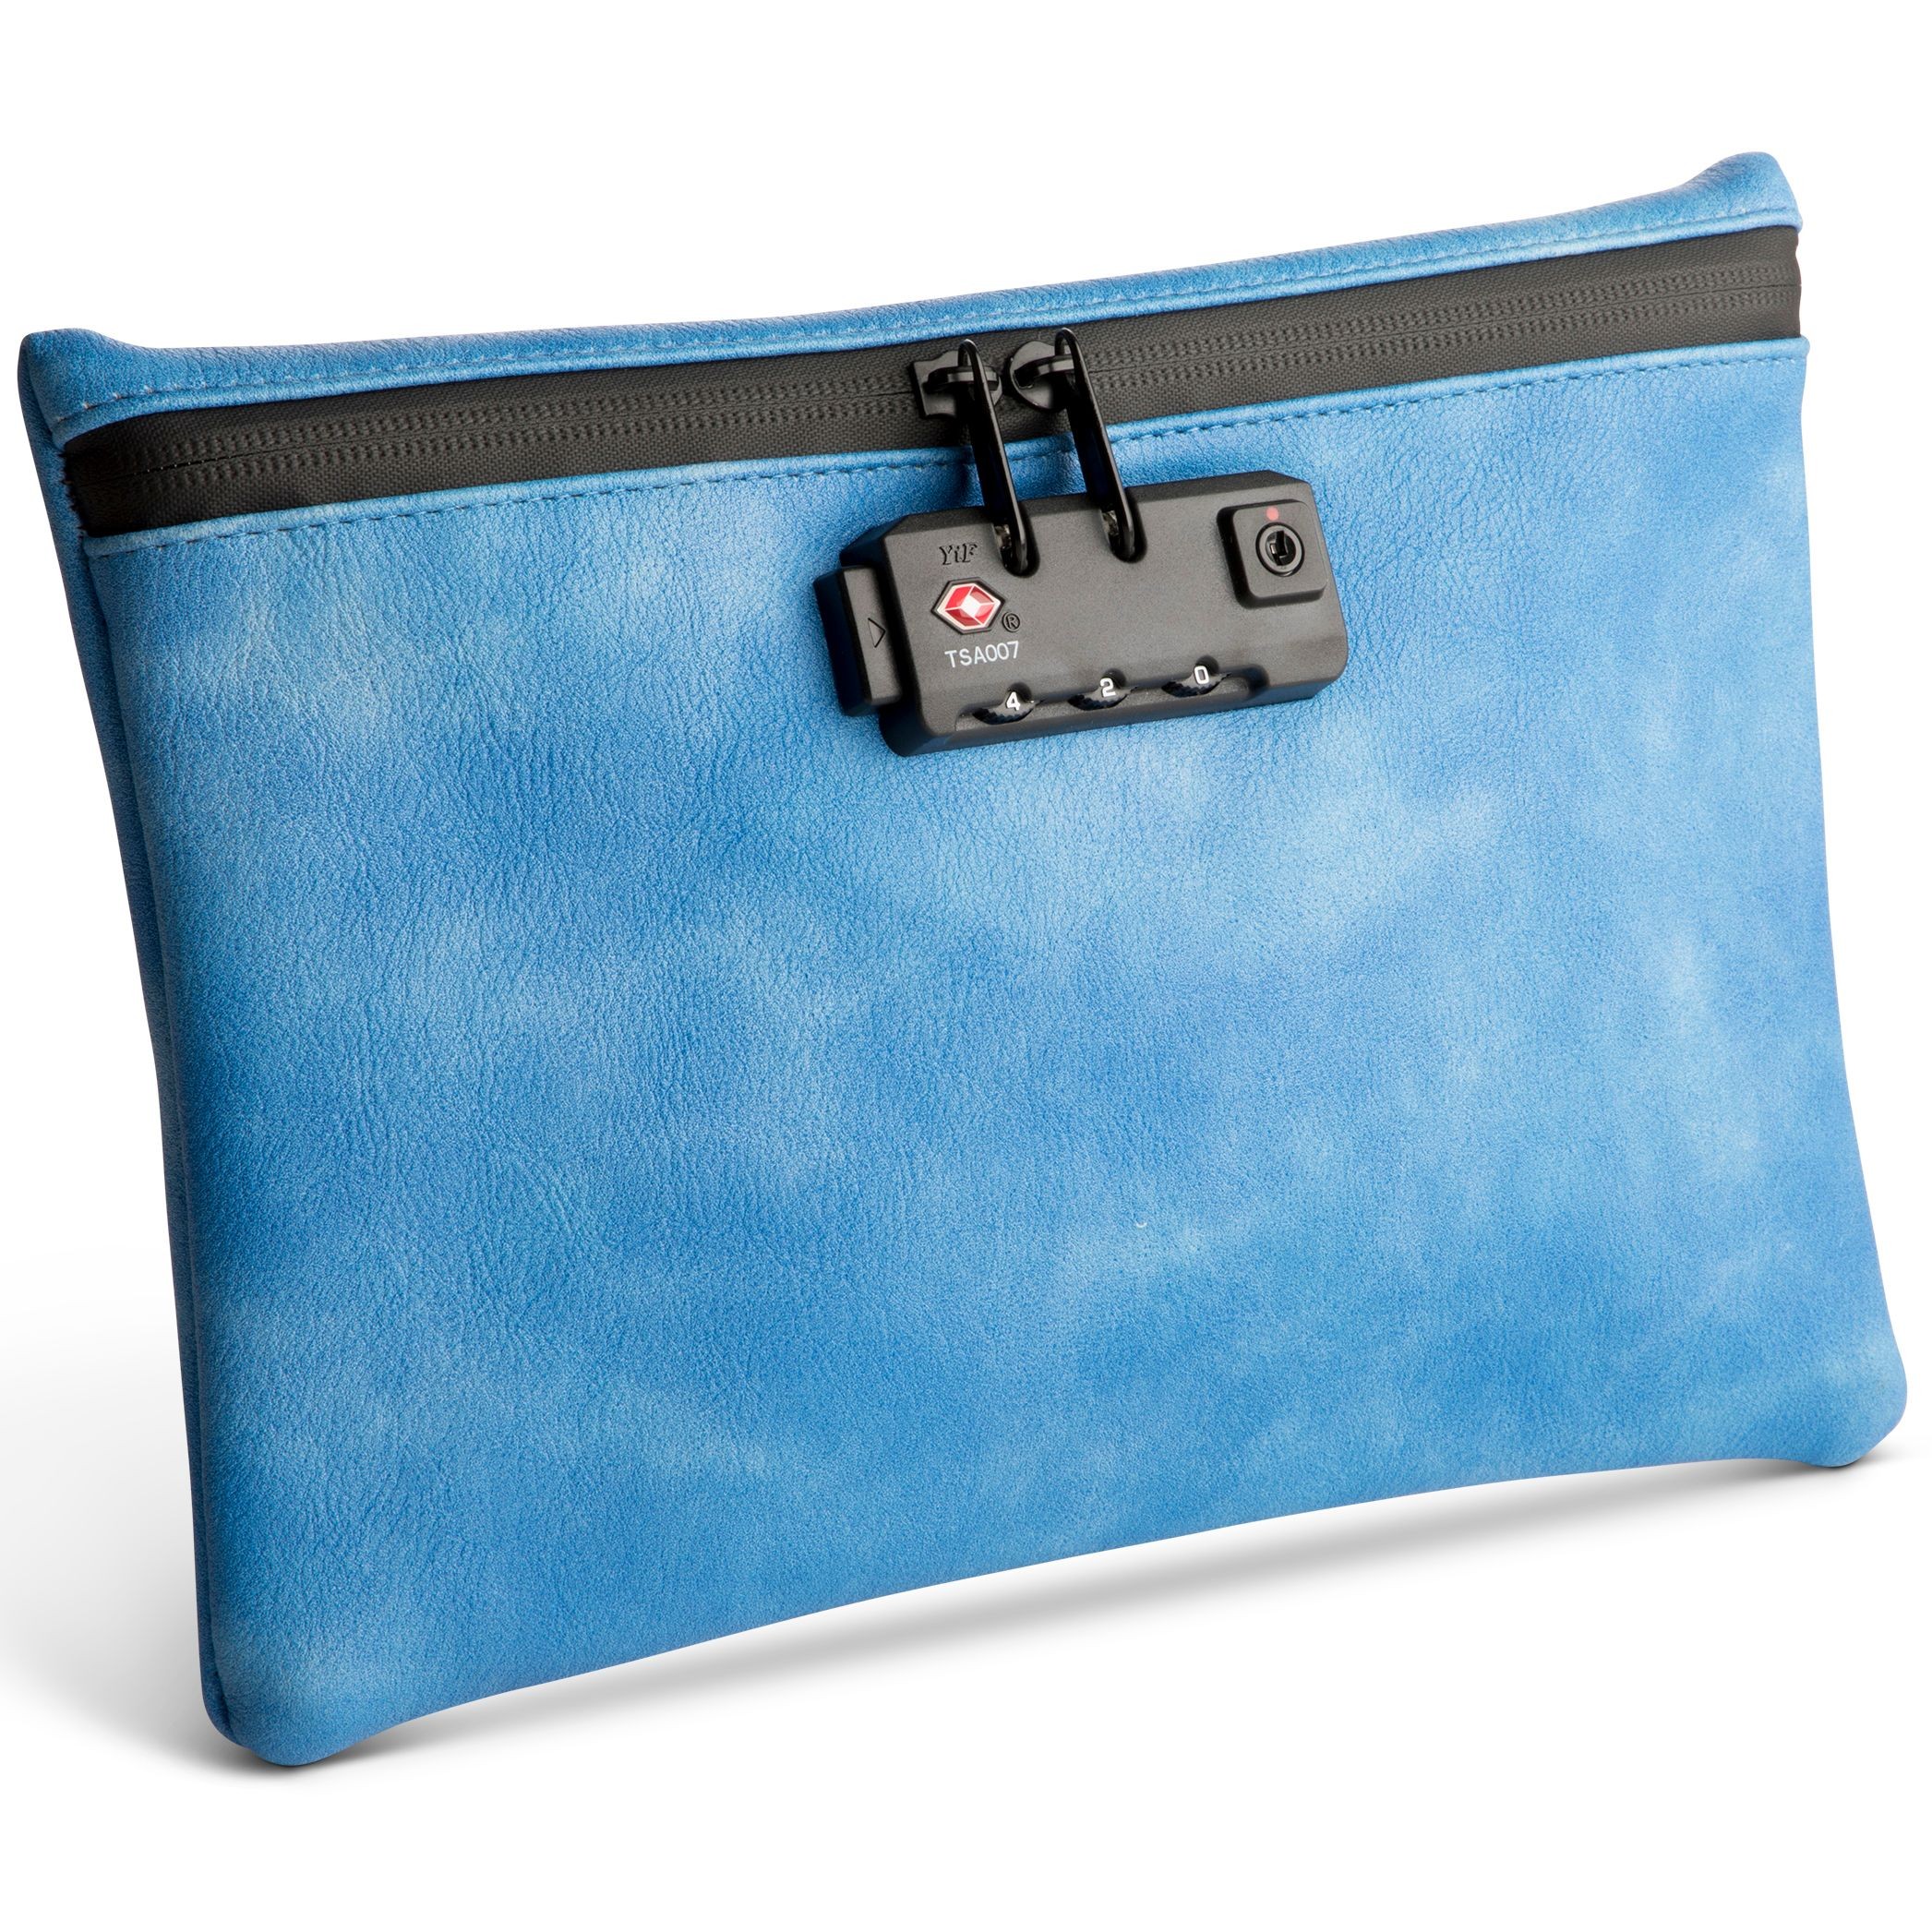 Prada Combination Padlock Lock For Purse Bag Suitcase Charm | eBay